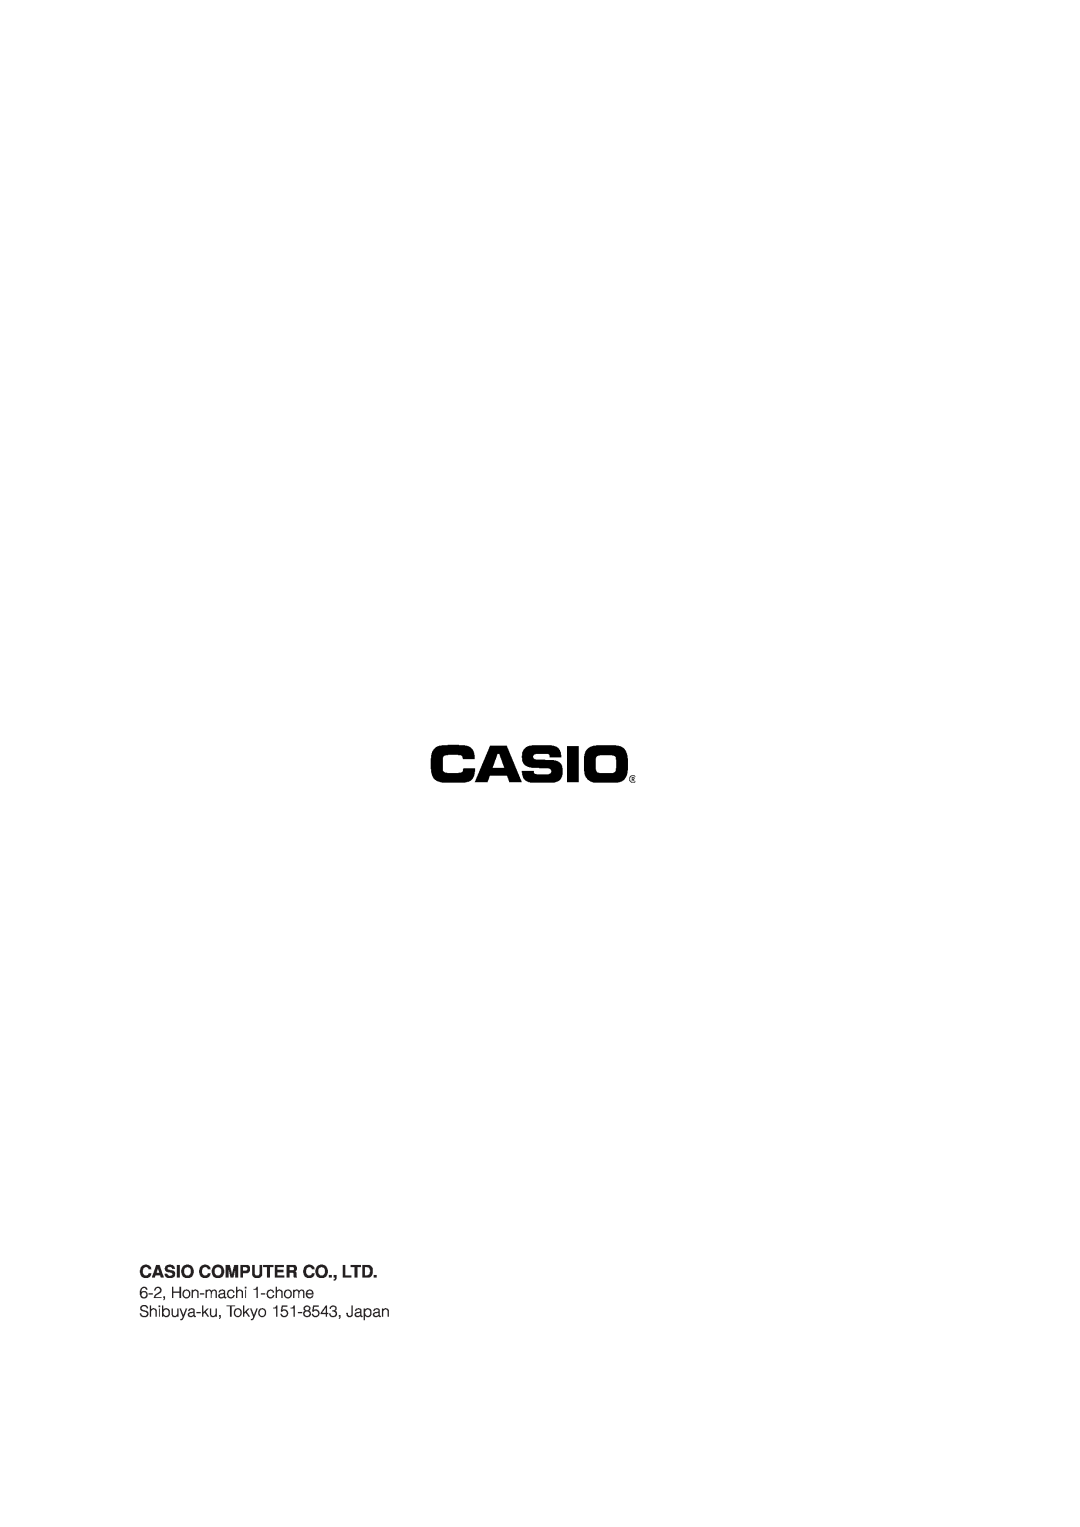 Casio SE-C6000, SE-S6000 user manual 6-2, Hon-machi 1-chome Shibuya-ku, Tokyo 151-8543, Japan 